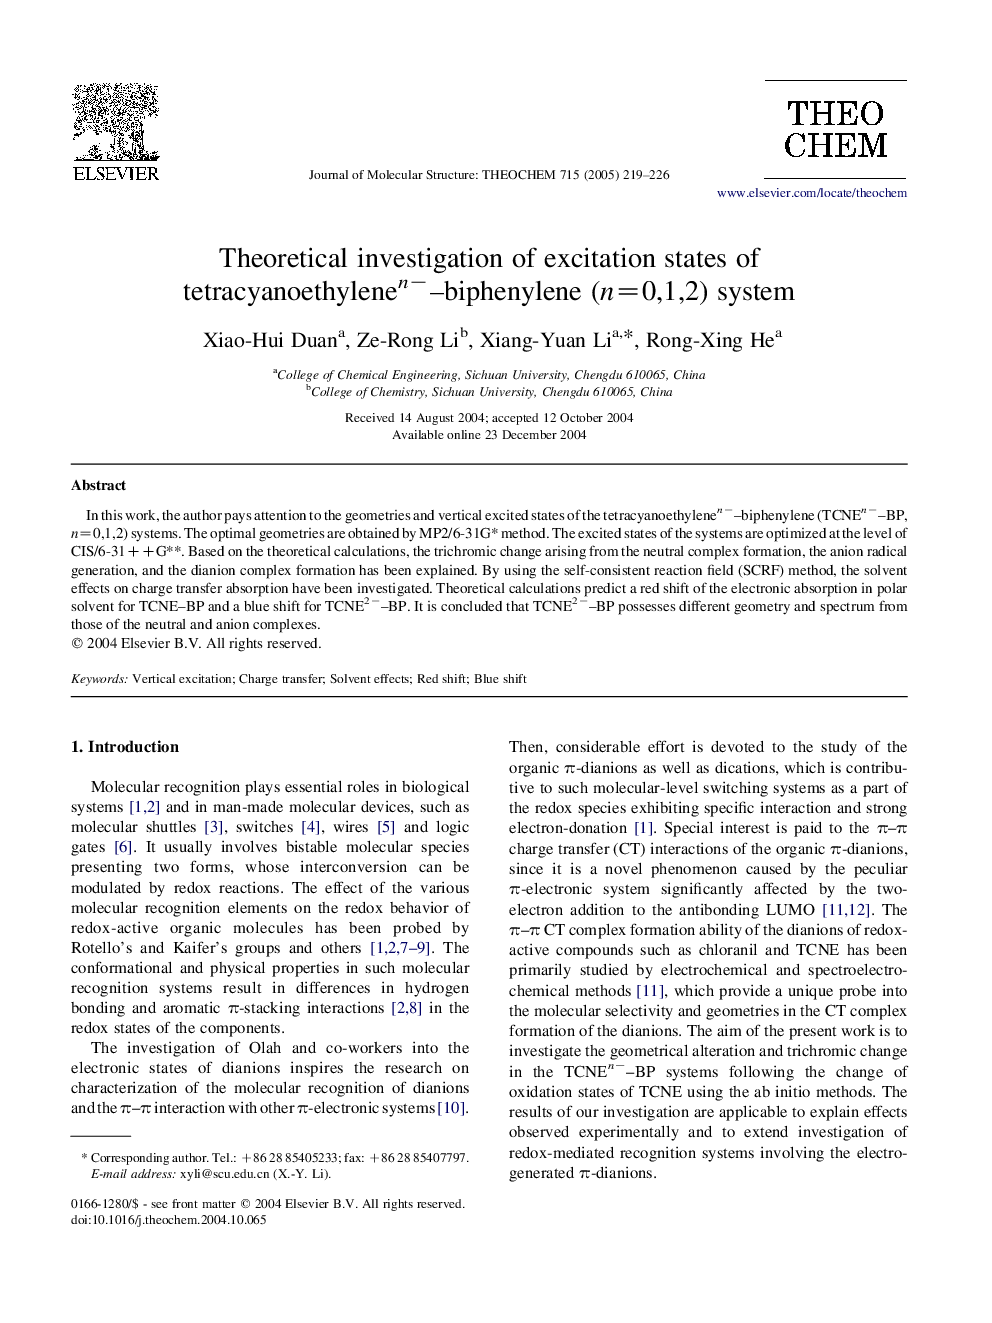 Theoretical investigation of excitation states of tetracyanoethylenenâ-biphenylene (n=0,1,2) system